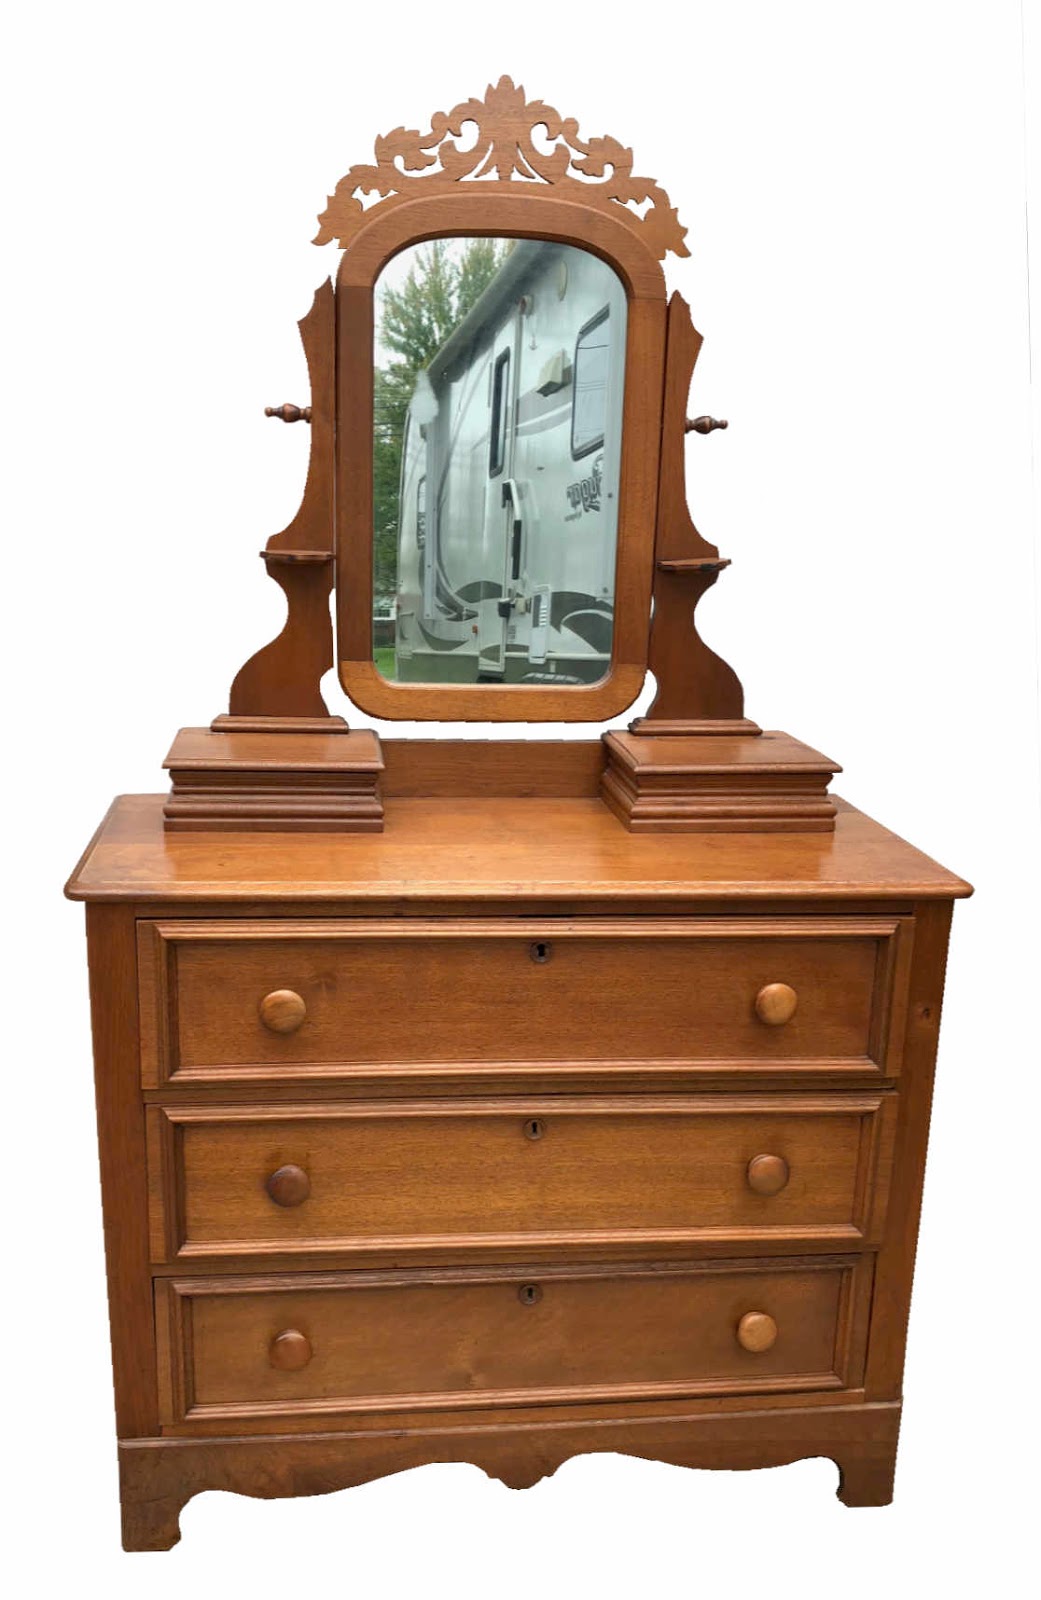 Finale Furniture Restoration Services Llc Antique Dresser With